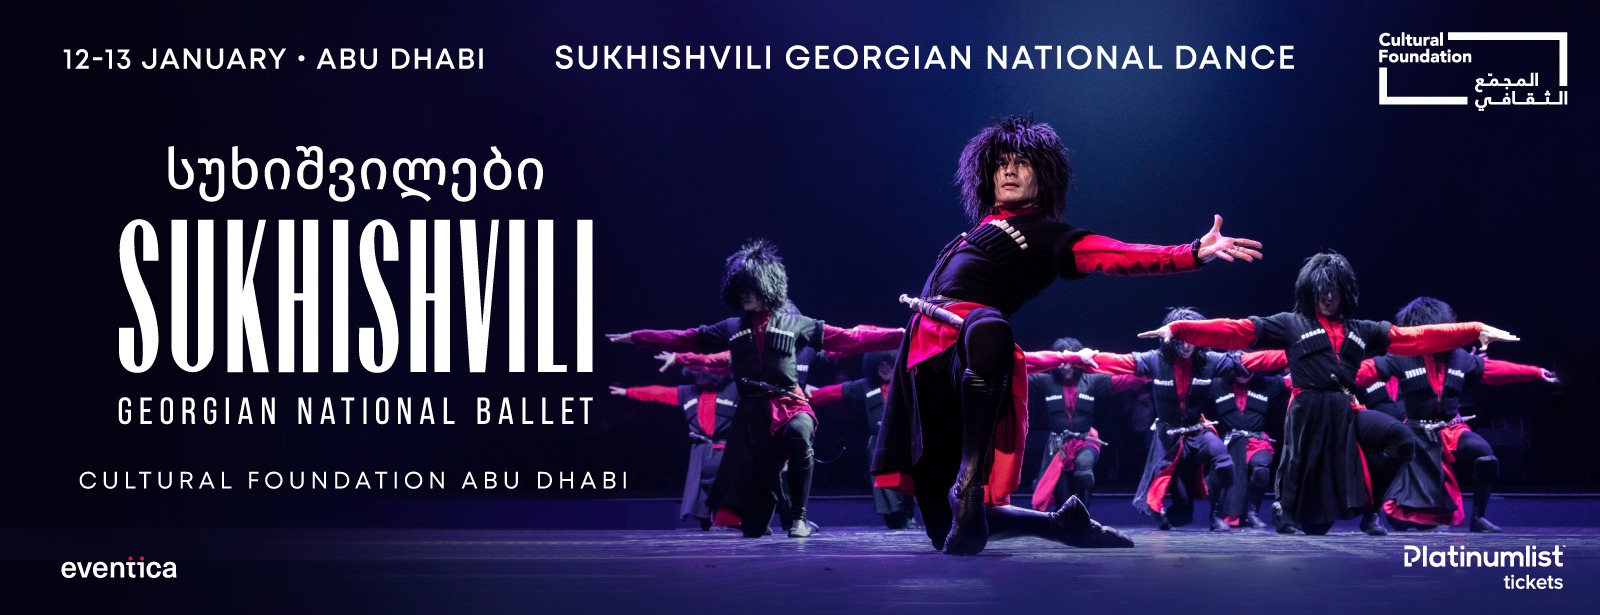 Georgian National Ballet Sukhishvili Live in Abu Dhabi - Coming Soon in UAE